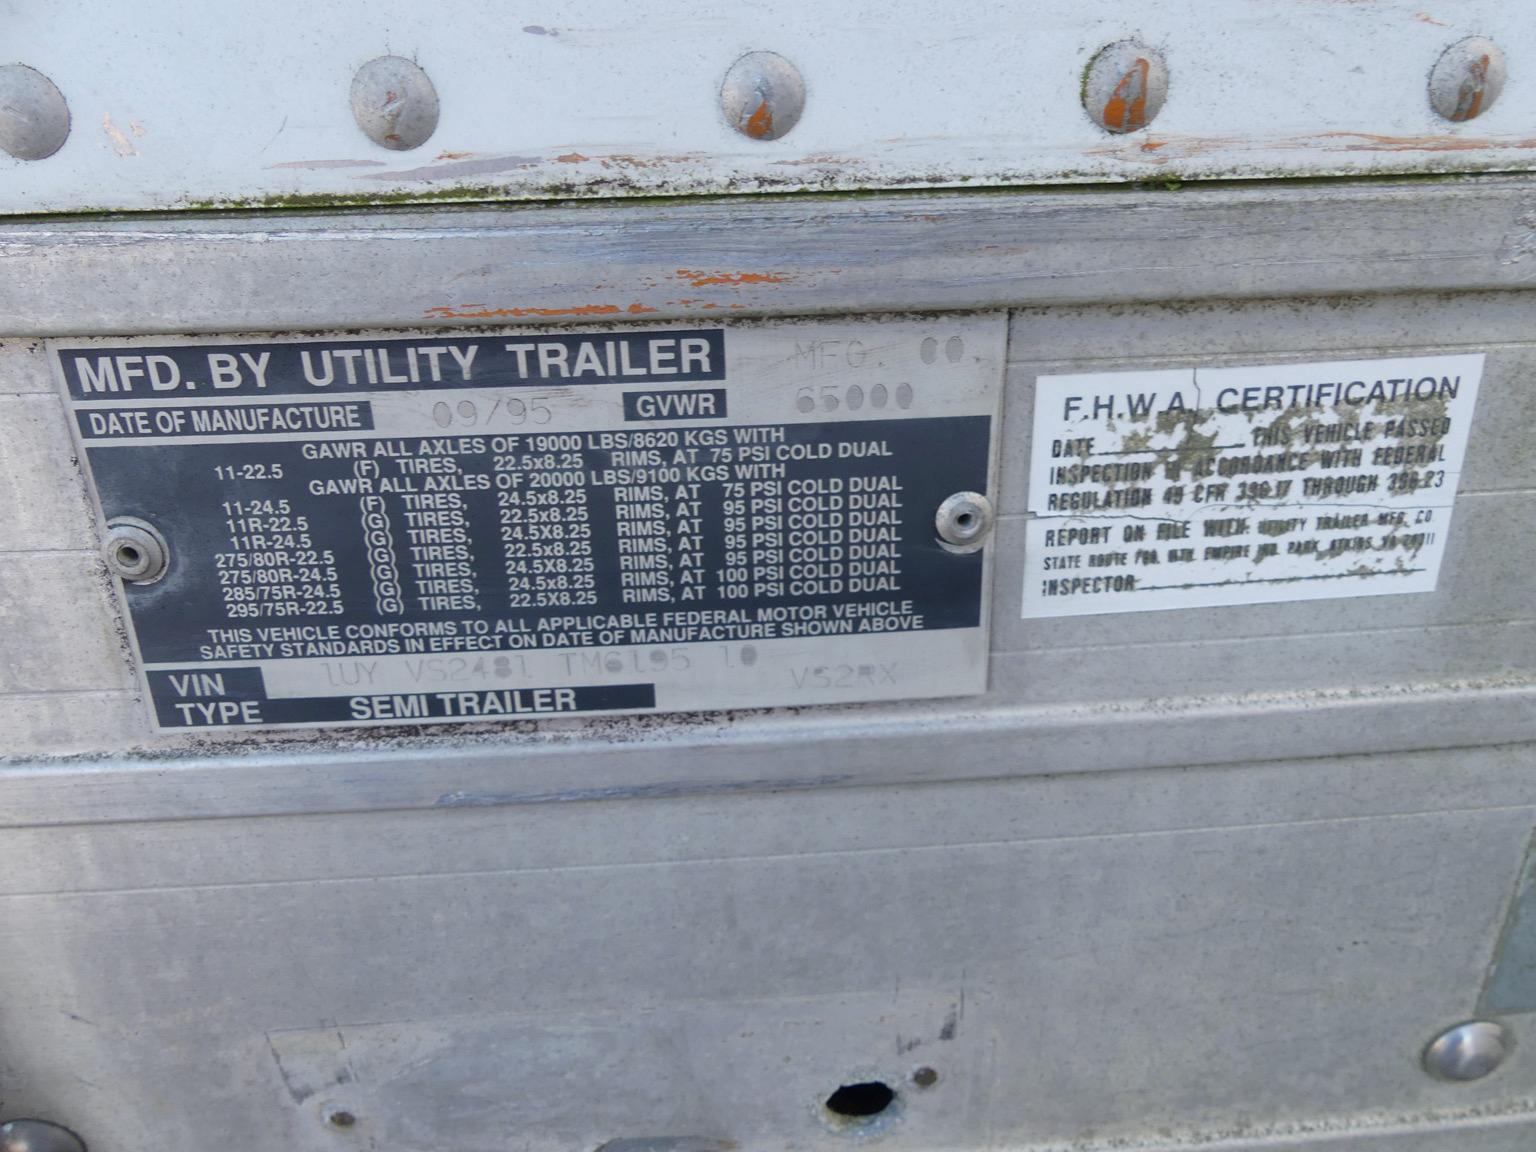 1995 Utility Reefer Trailer, s/n LUYVS248LTM619510 (No Title - Bill of Sale